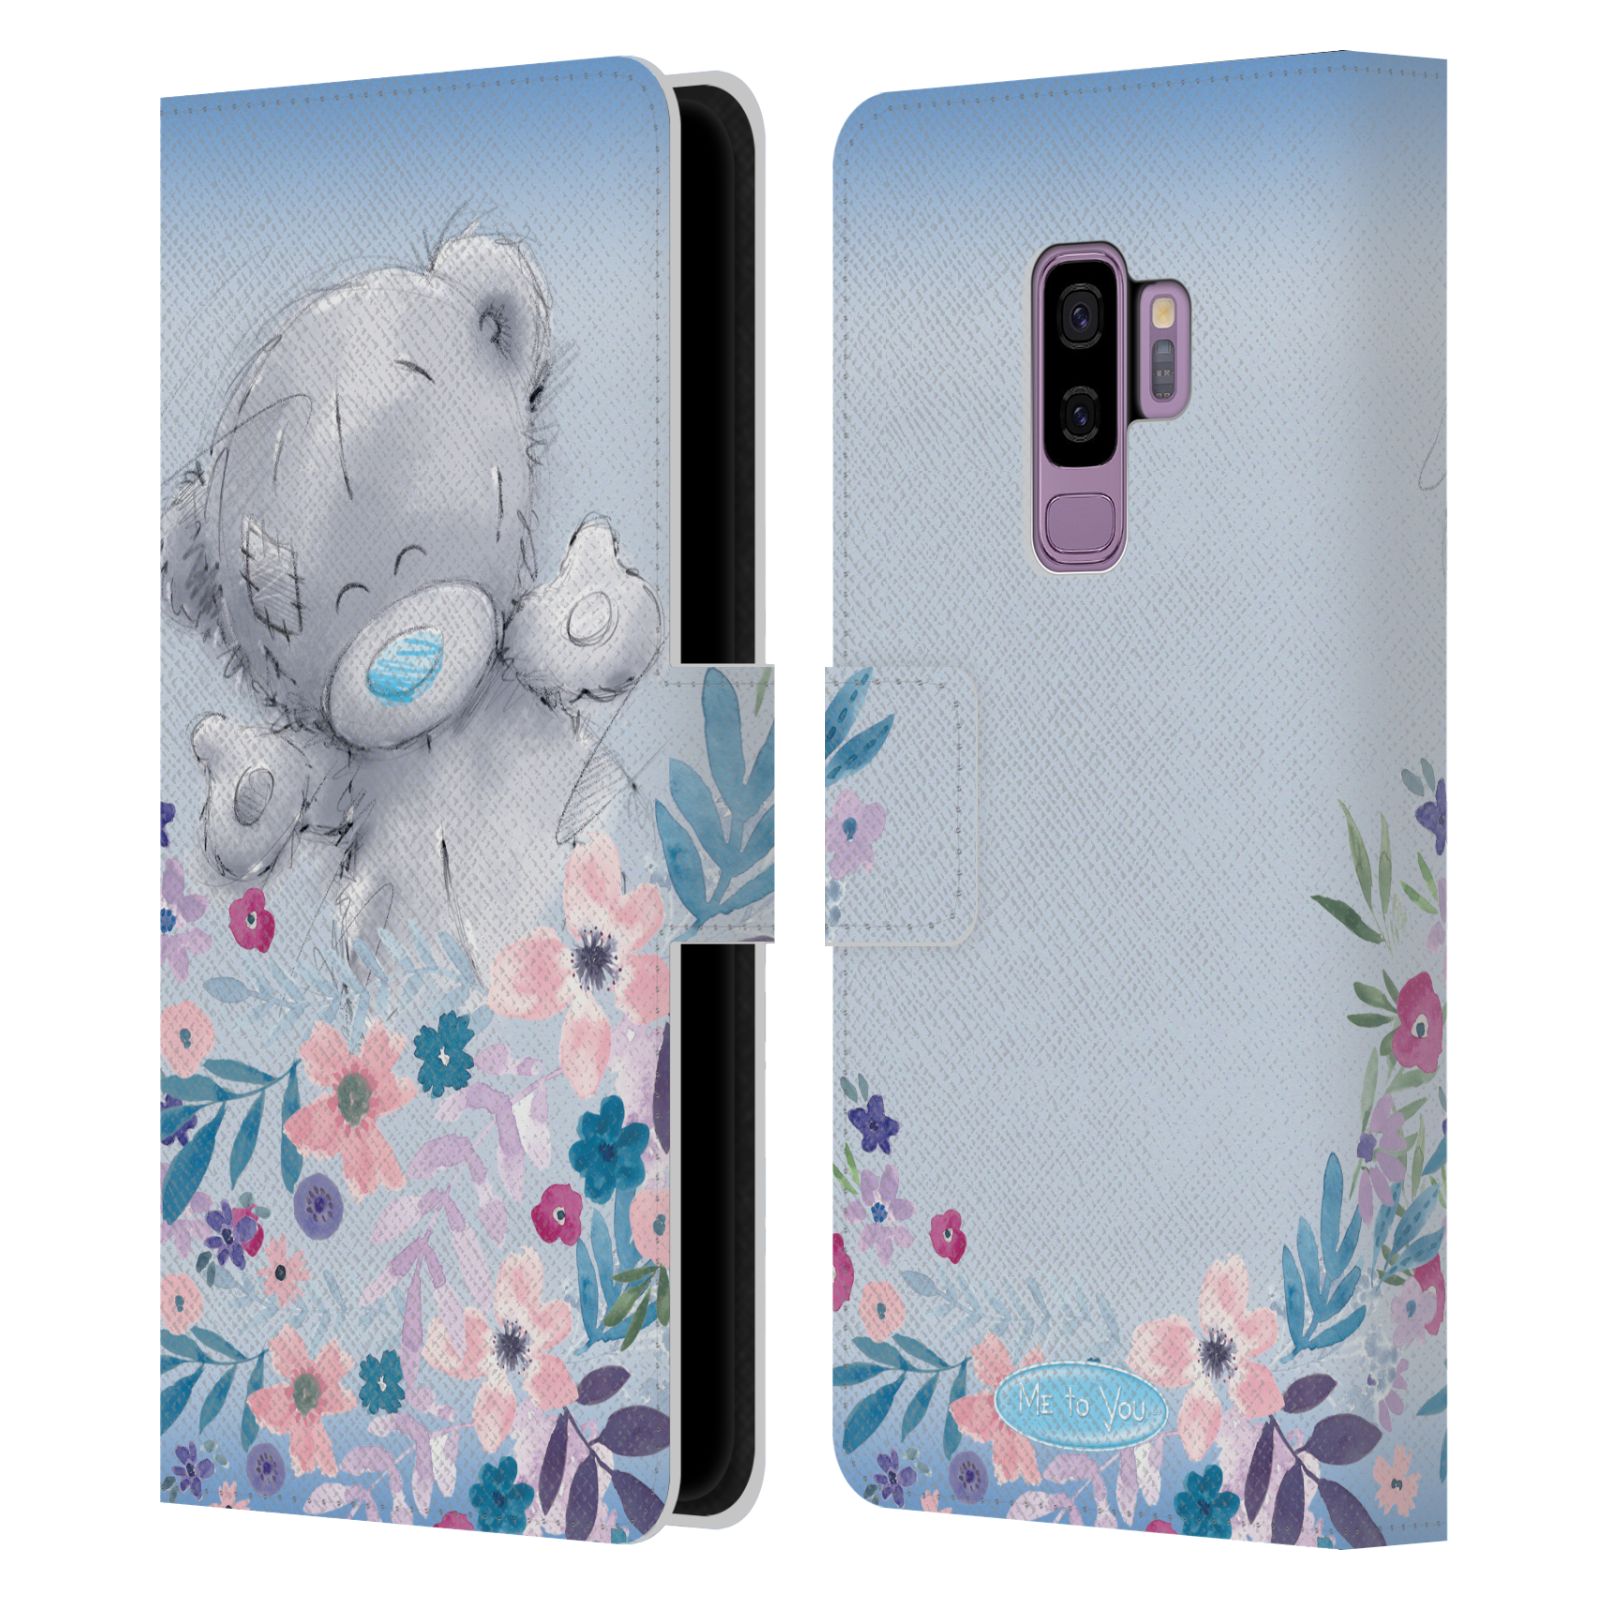 Pouzdro na mobil Samsung Galaxy S9+ / S9 PLUS - HEAD CASE - Me To You - Medvídek mezi květinami